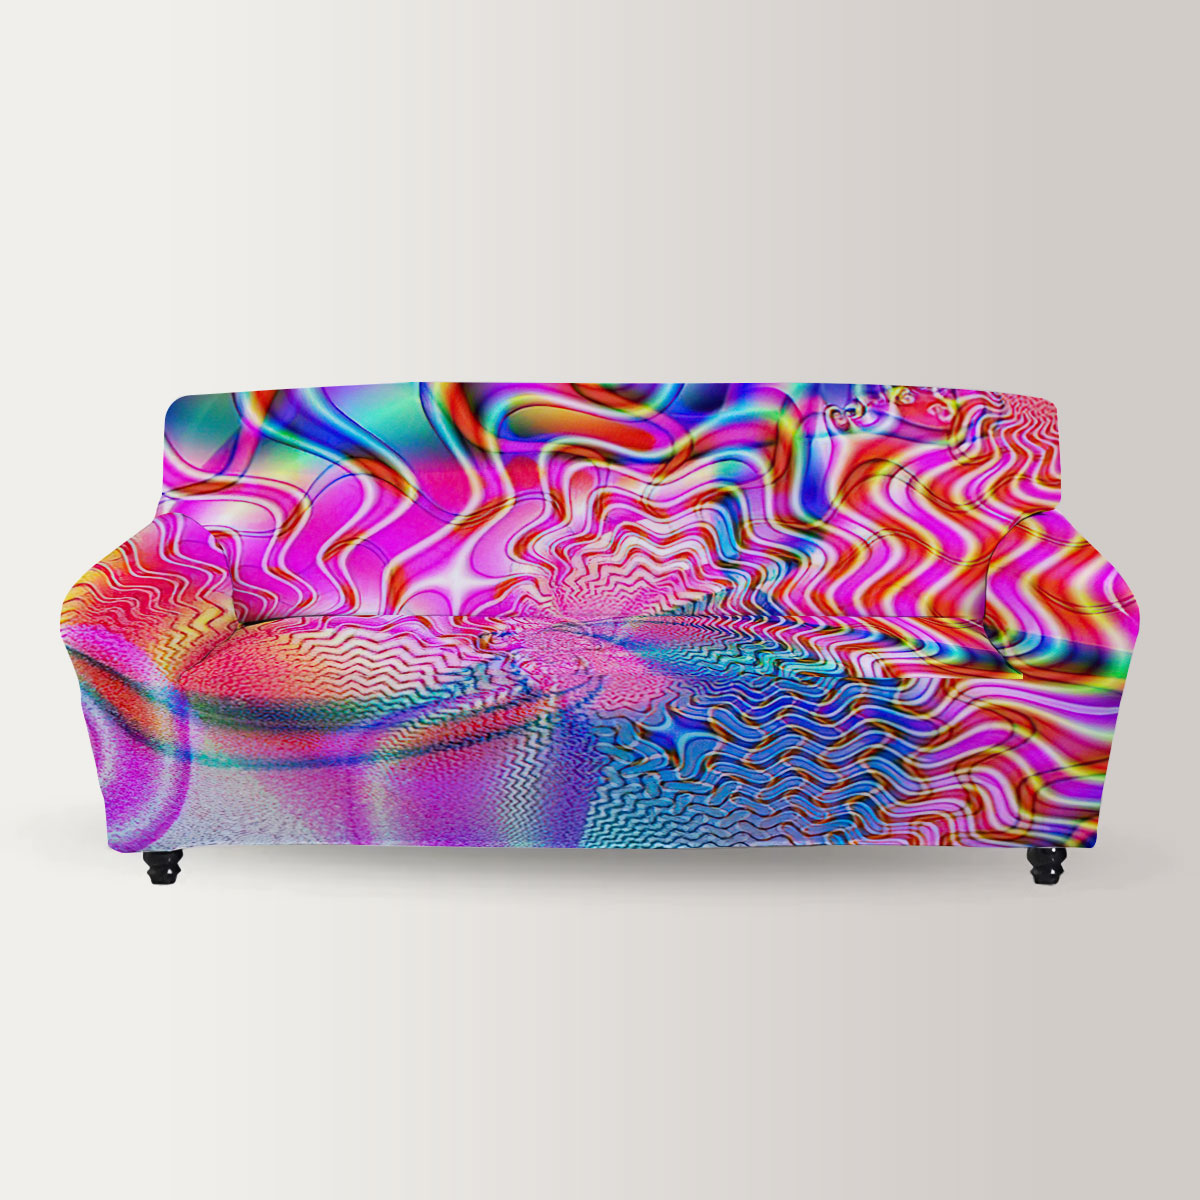 Psychedelia Hippie Sofa Cover